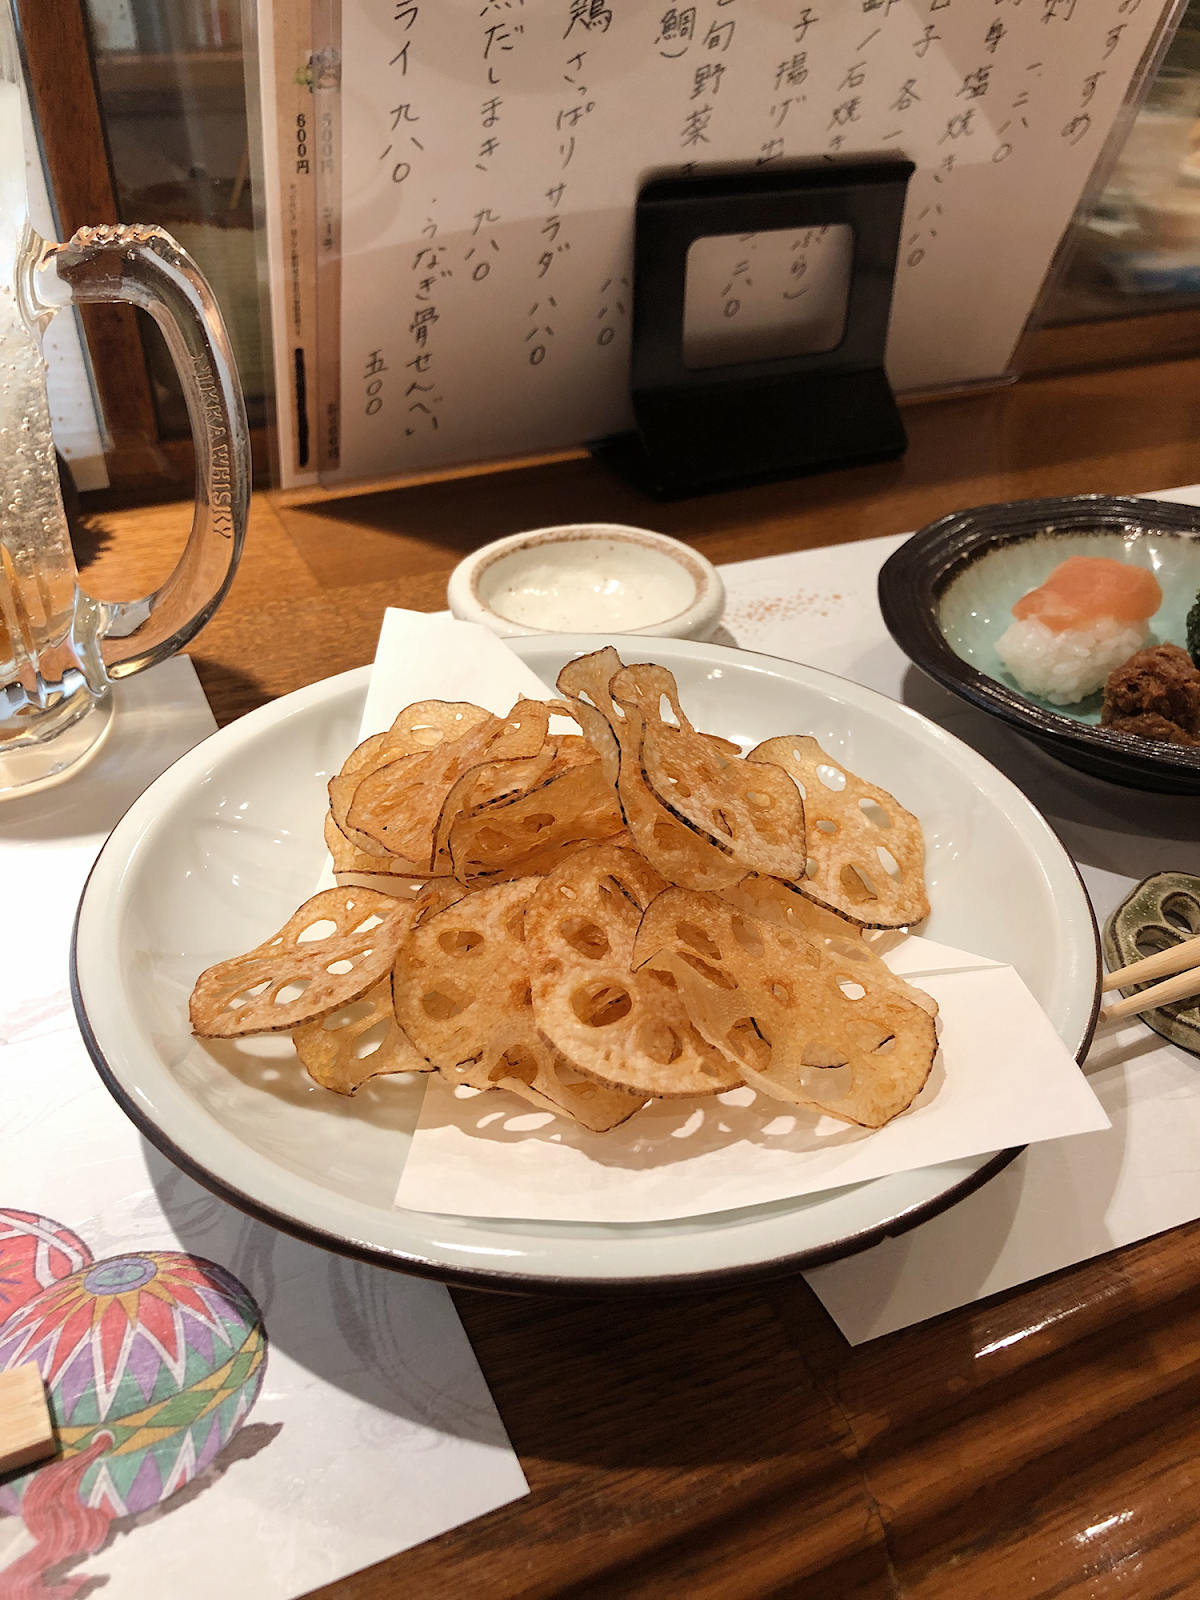 Fried lotus root chips, Kanazawa eats, Kanazawa trip from Tokyo, must-visit cities in Japan, Nishi Chaya District, Higashi Chaya District, photogenic and charming towns in Japan - FOREVERVANNY